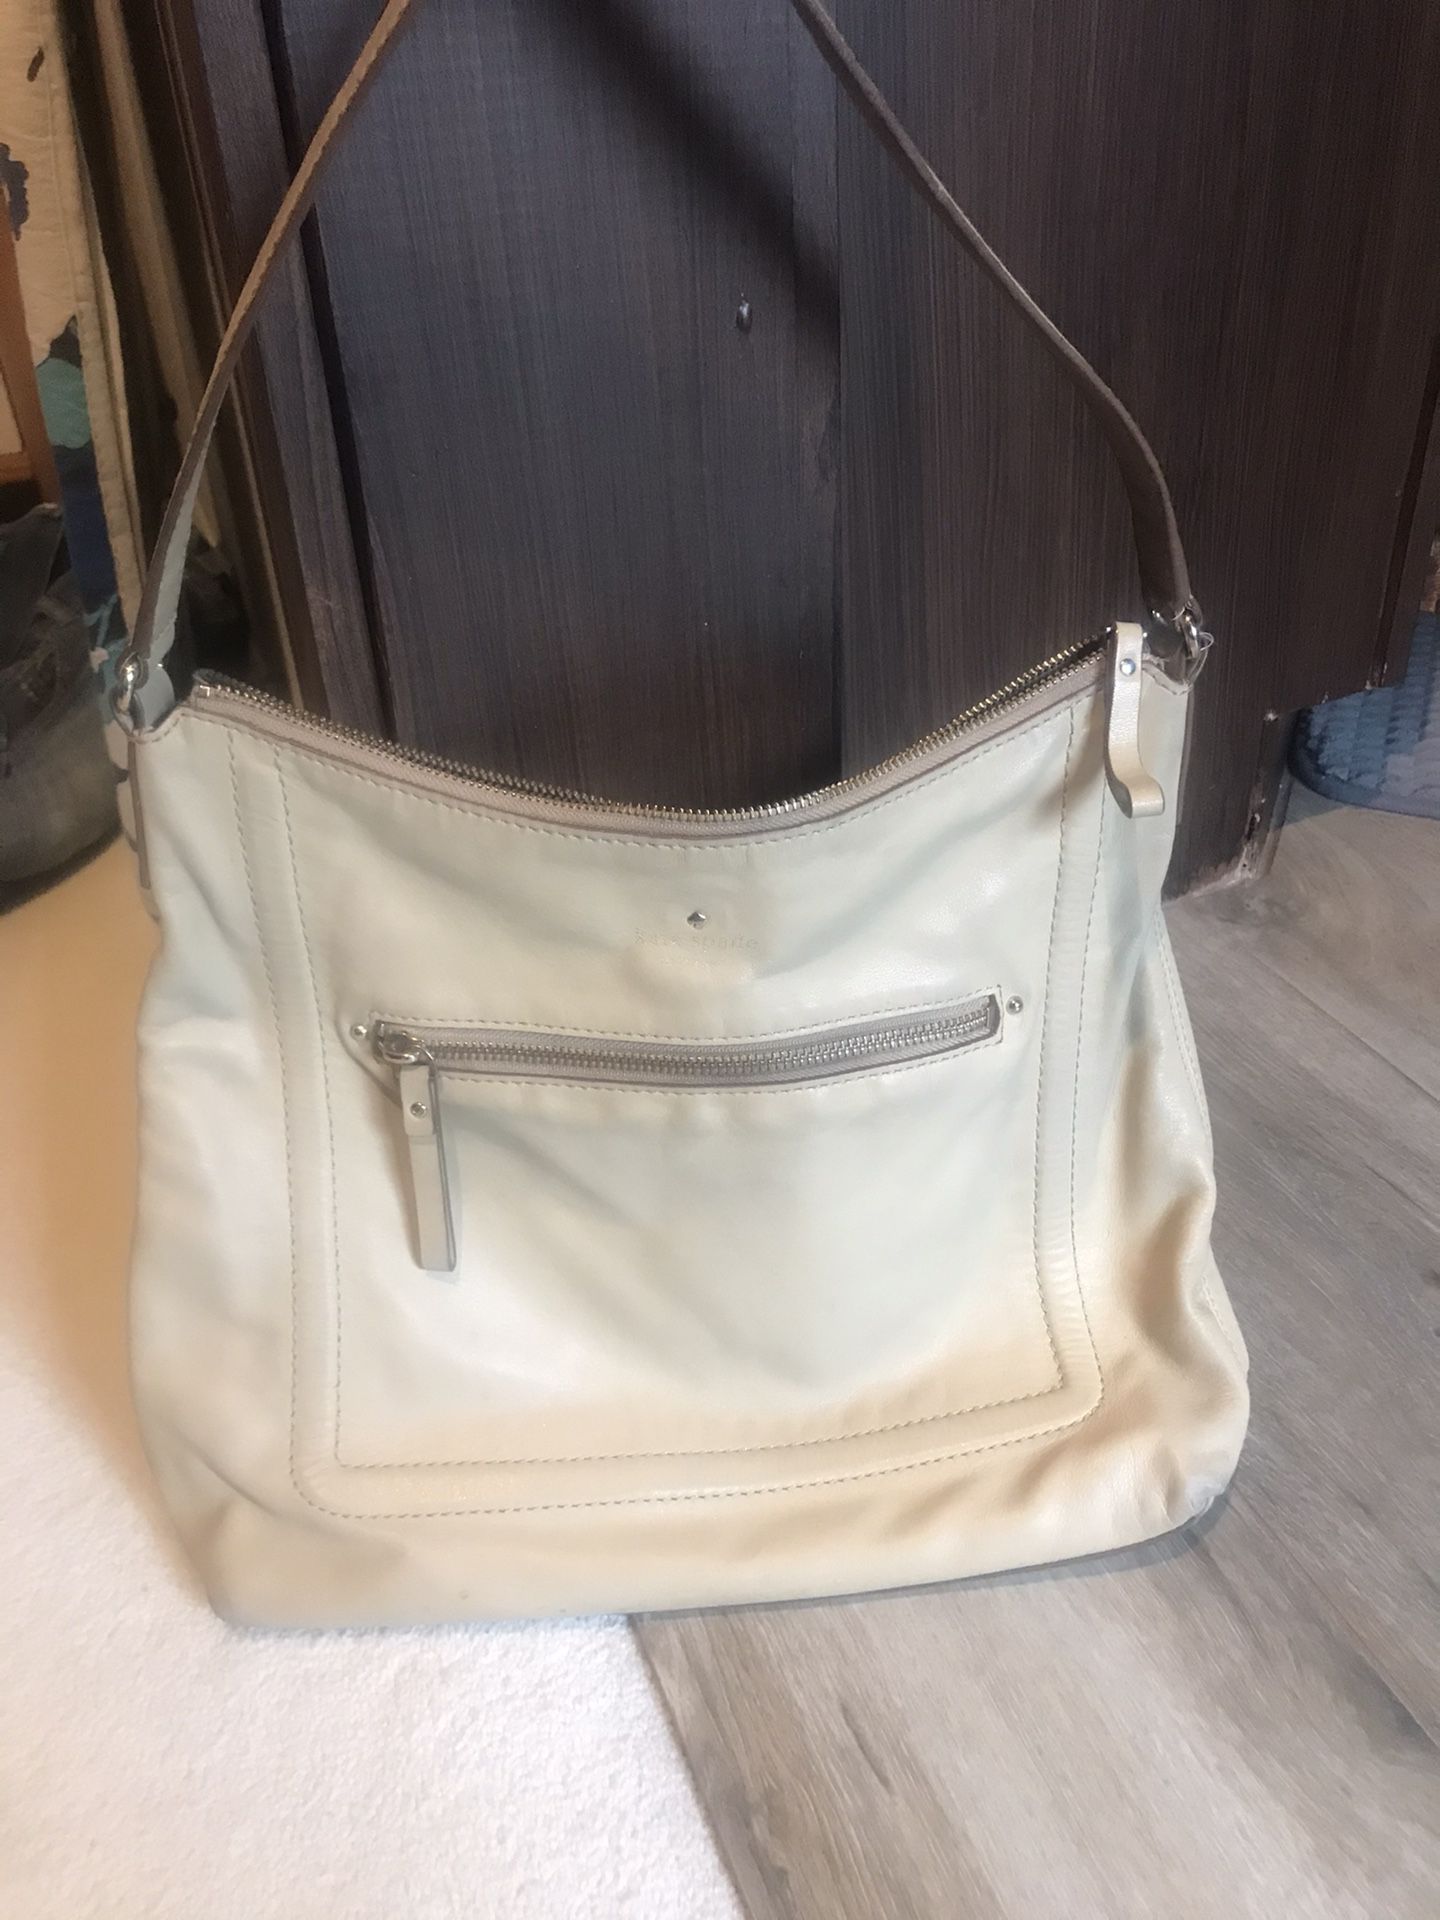 Kate Spade beige leather medium size bag